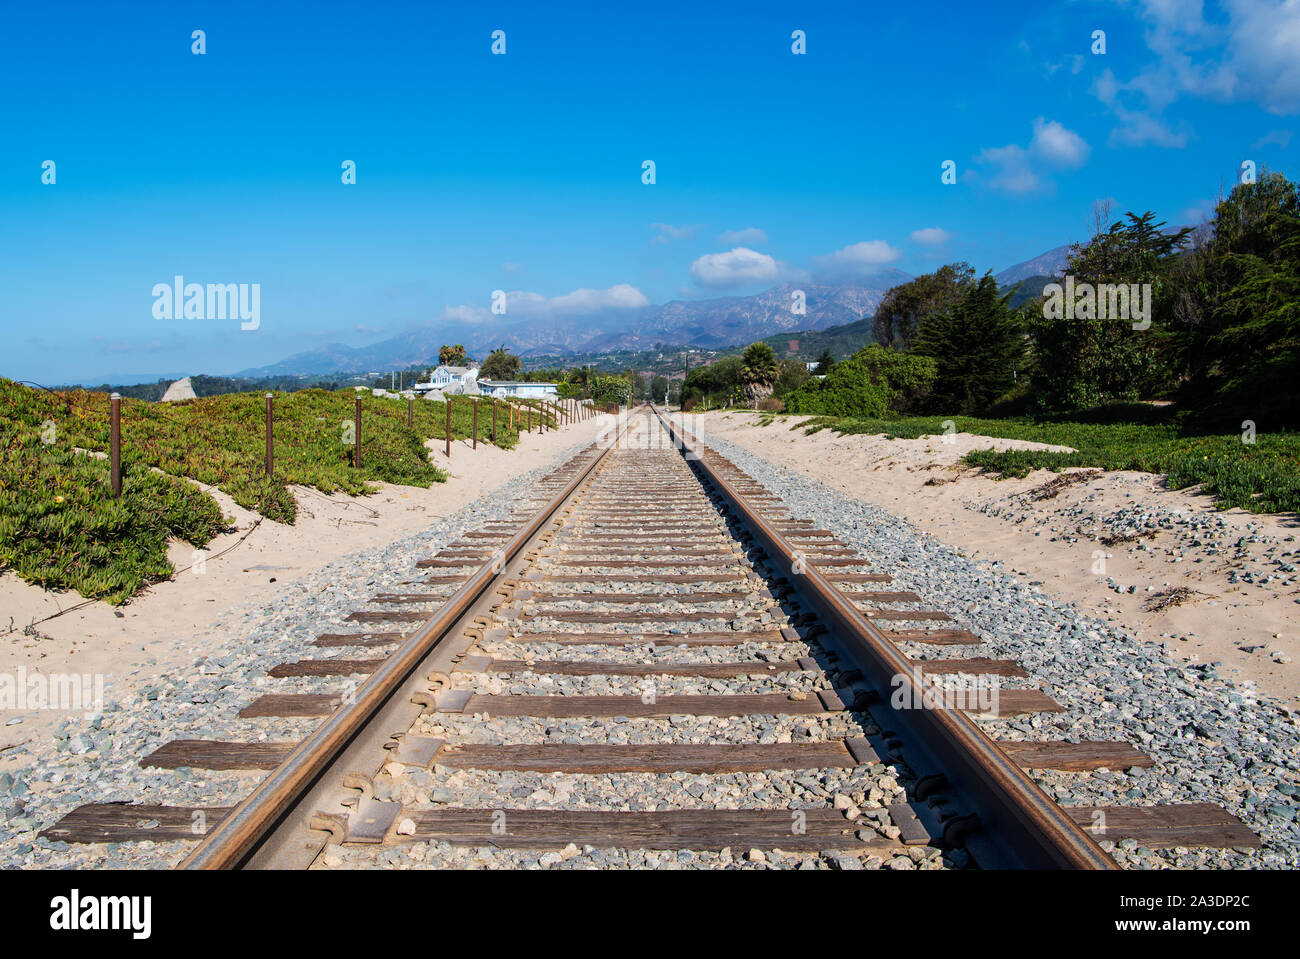 Railroad tracks through sandy dunes covered in green ice plant along California's coastal passenger train route in Santa Barbara Stock Photo